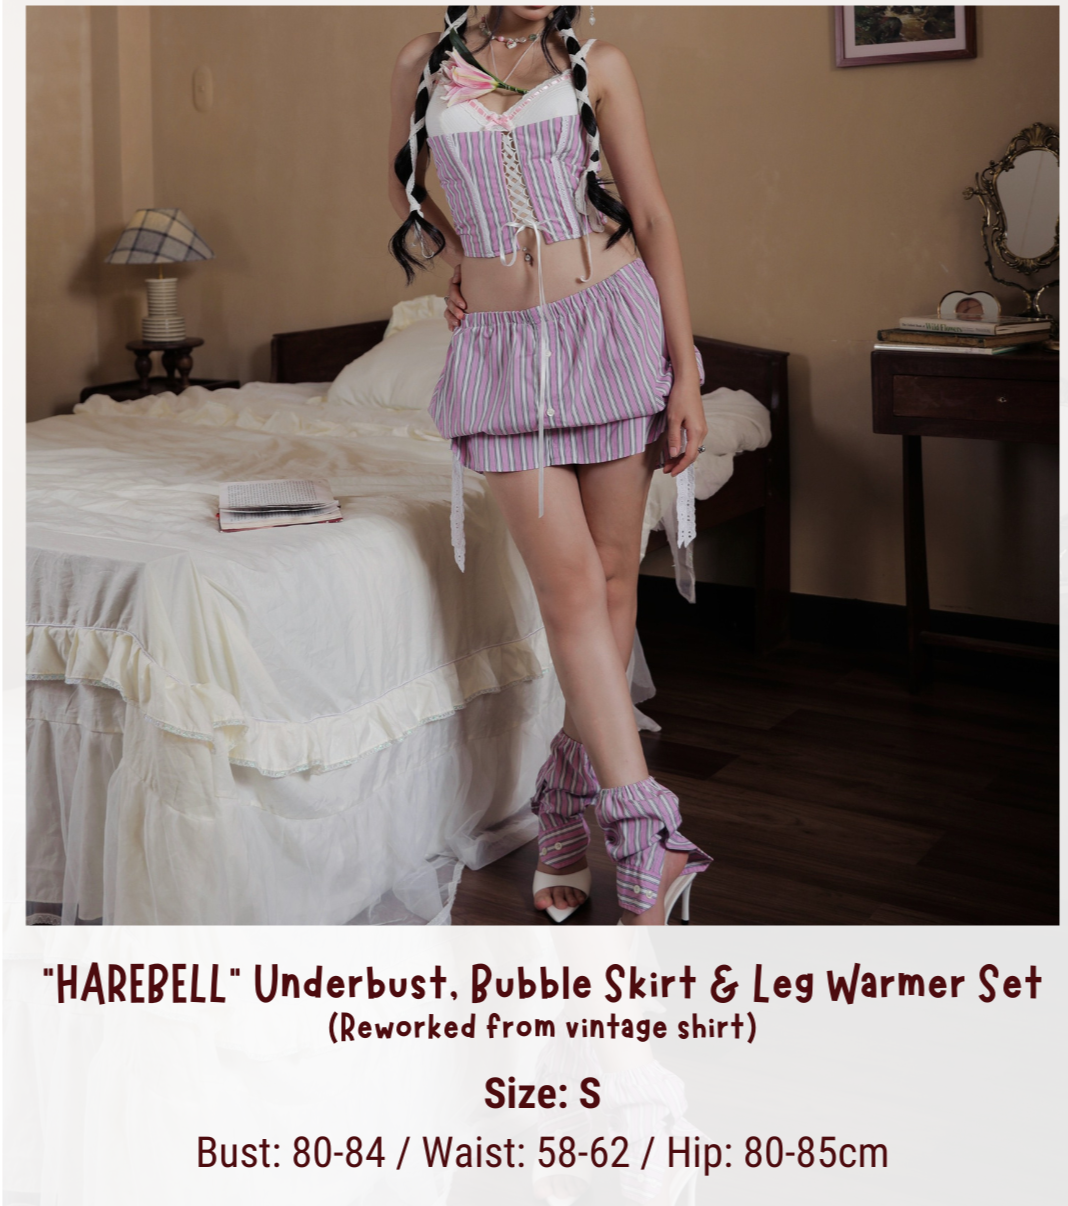 "HAREBELL" Underbust & Bubble Skirt Set